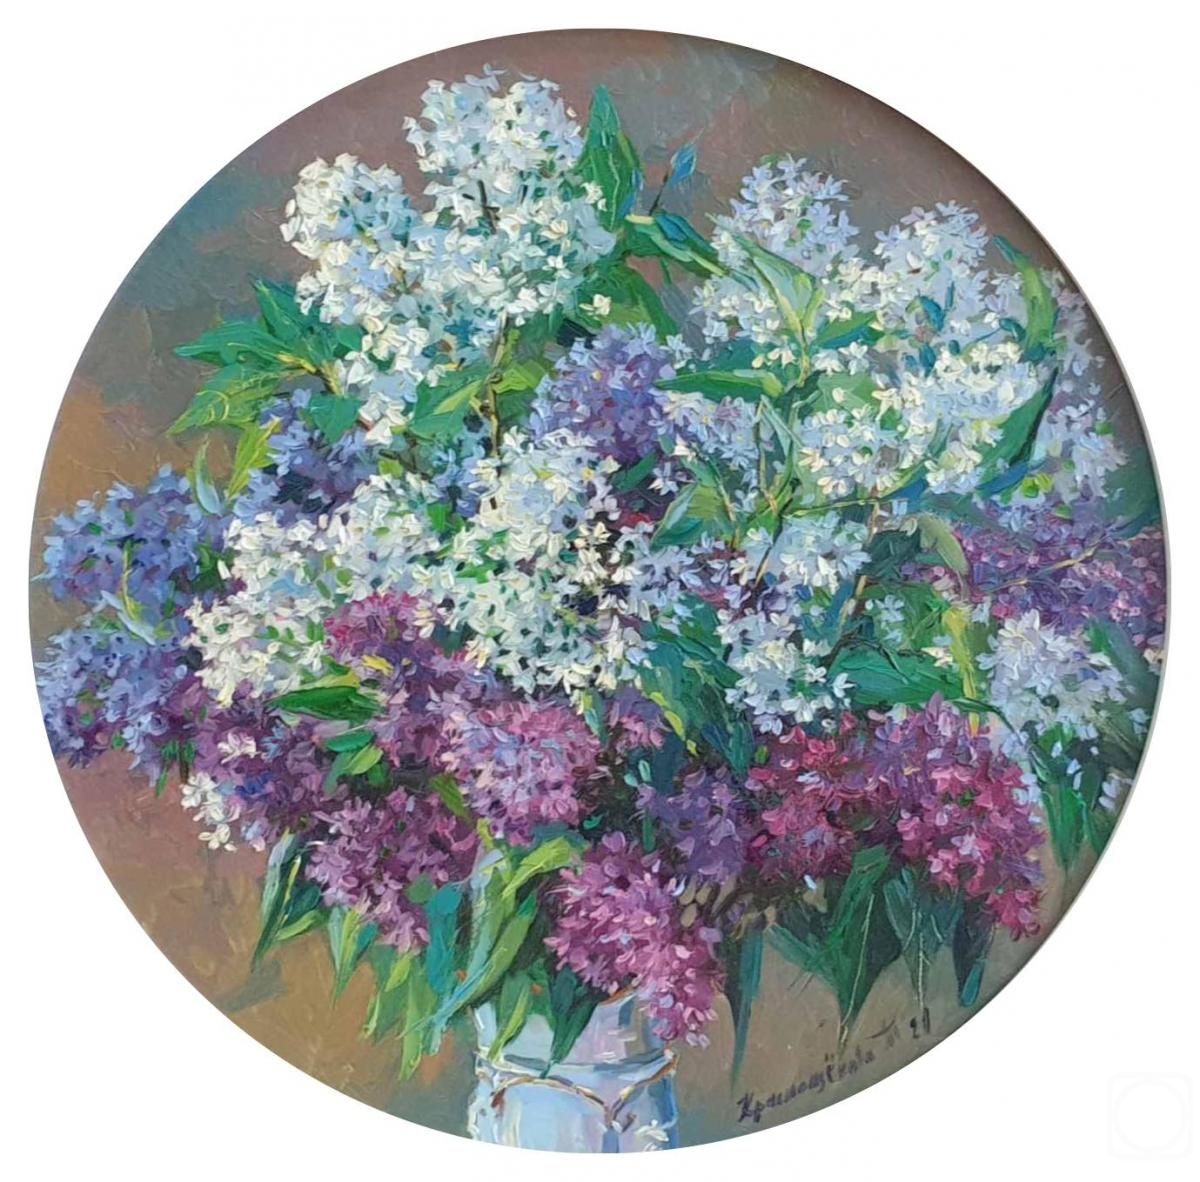 Krasnoschekova Tatyana. Lilac